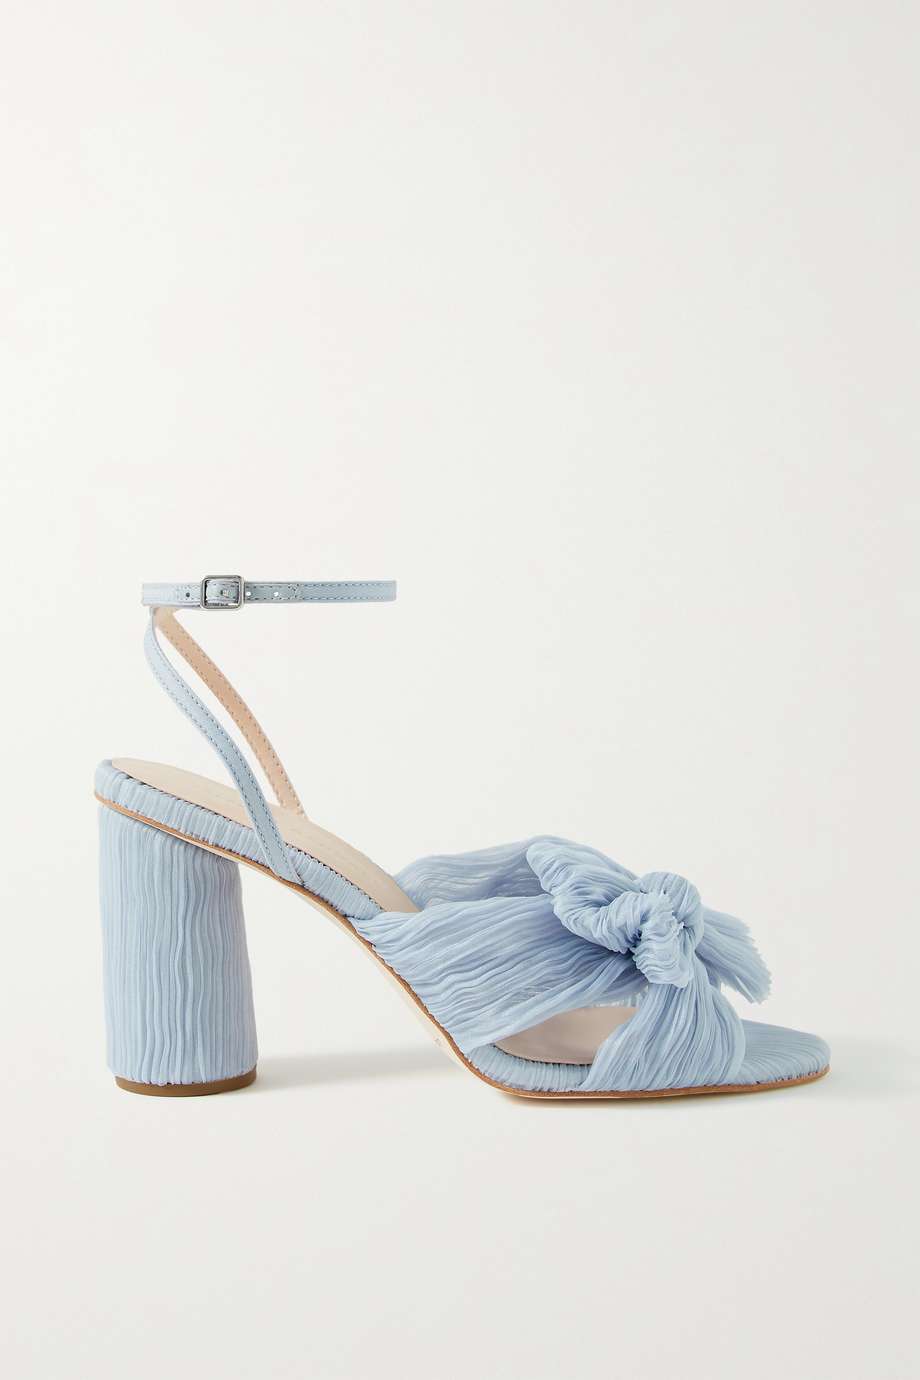 Loeffler Randall Camellia Bow-Embellished Plissé-Organza Sandals